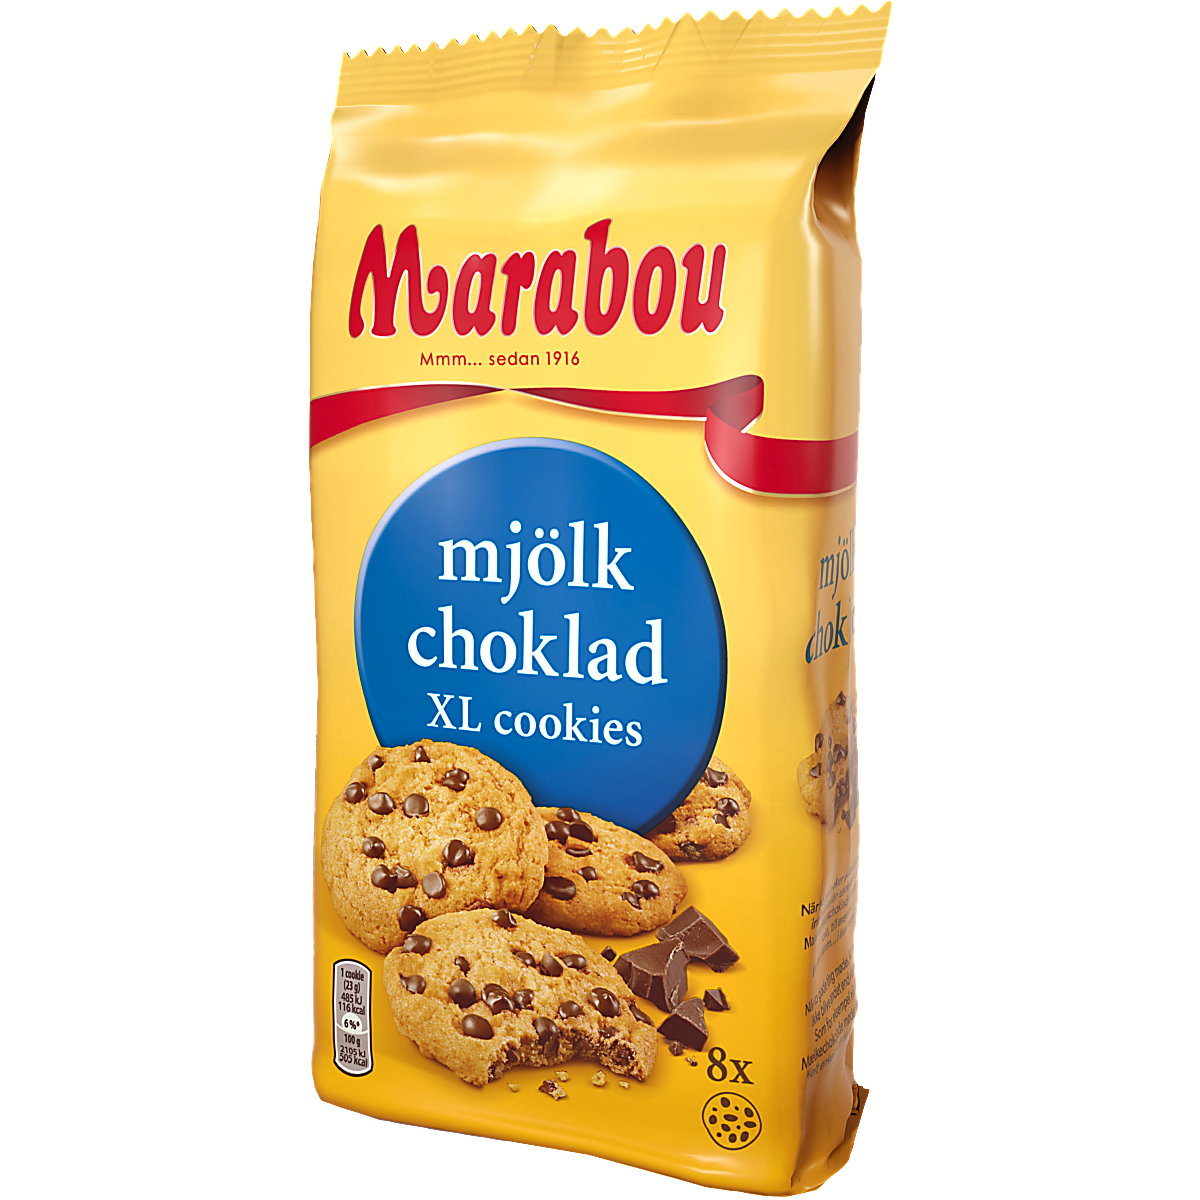 Marabou Milchschokoladen-XL-Kekse by Swedish Candy Store